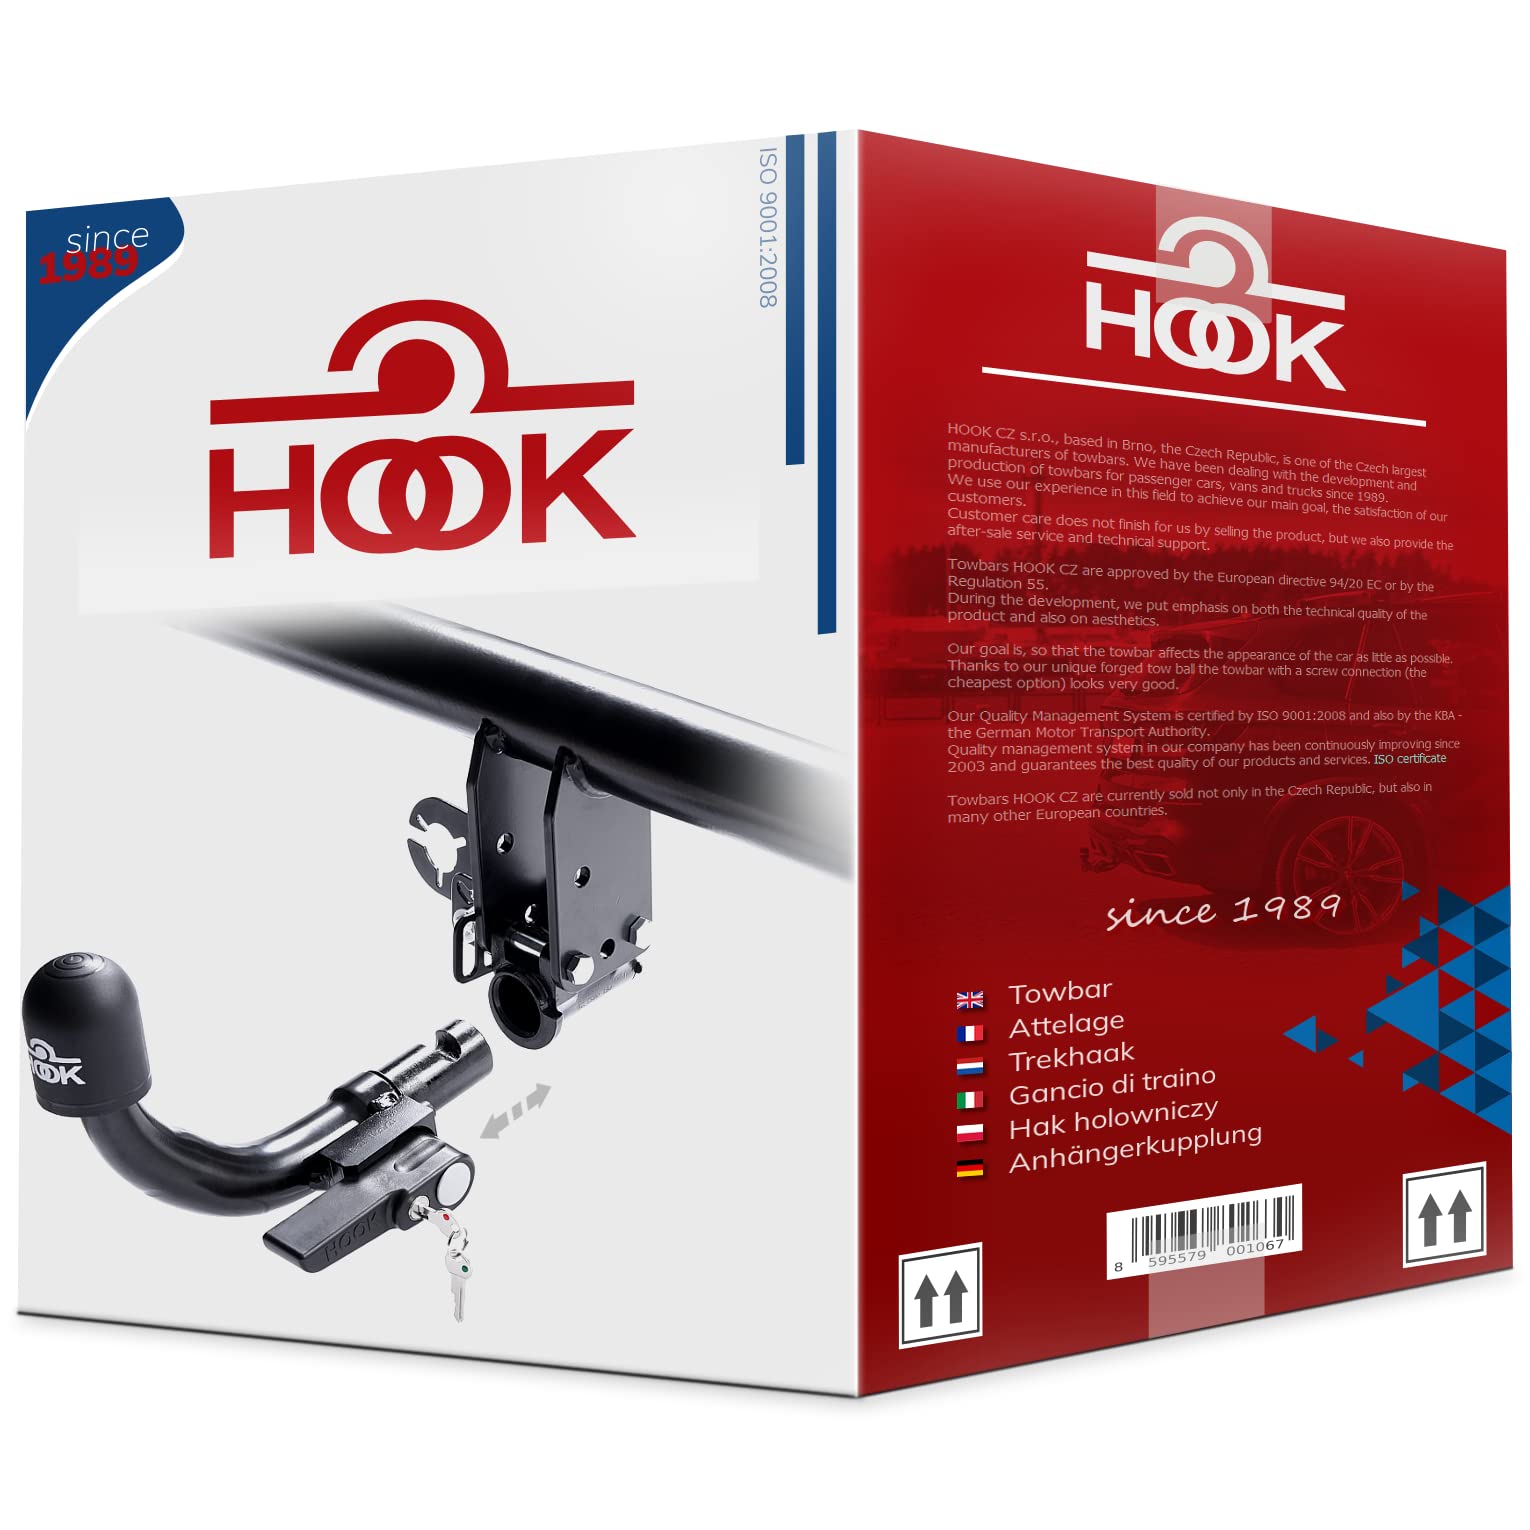 Hook horizontal abnehmbare AHK Anhängerkupplung für Audi A4 B8/8K Kombi/Avant 2008-11.2015 + universell Elektrosatz 13-polig, 030105@WH2SG13 von Hook